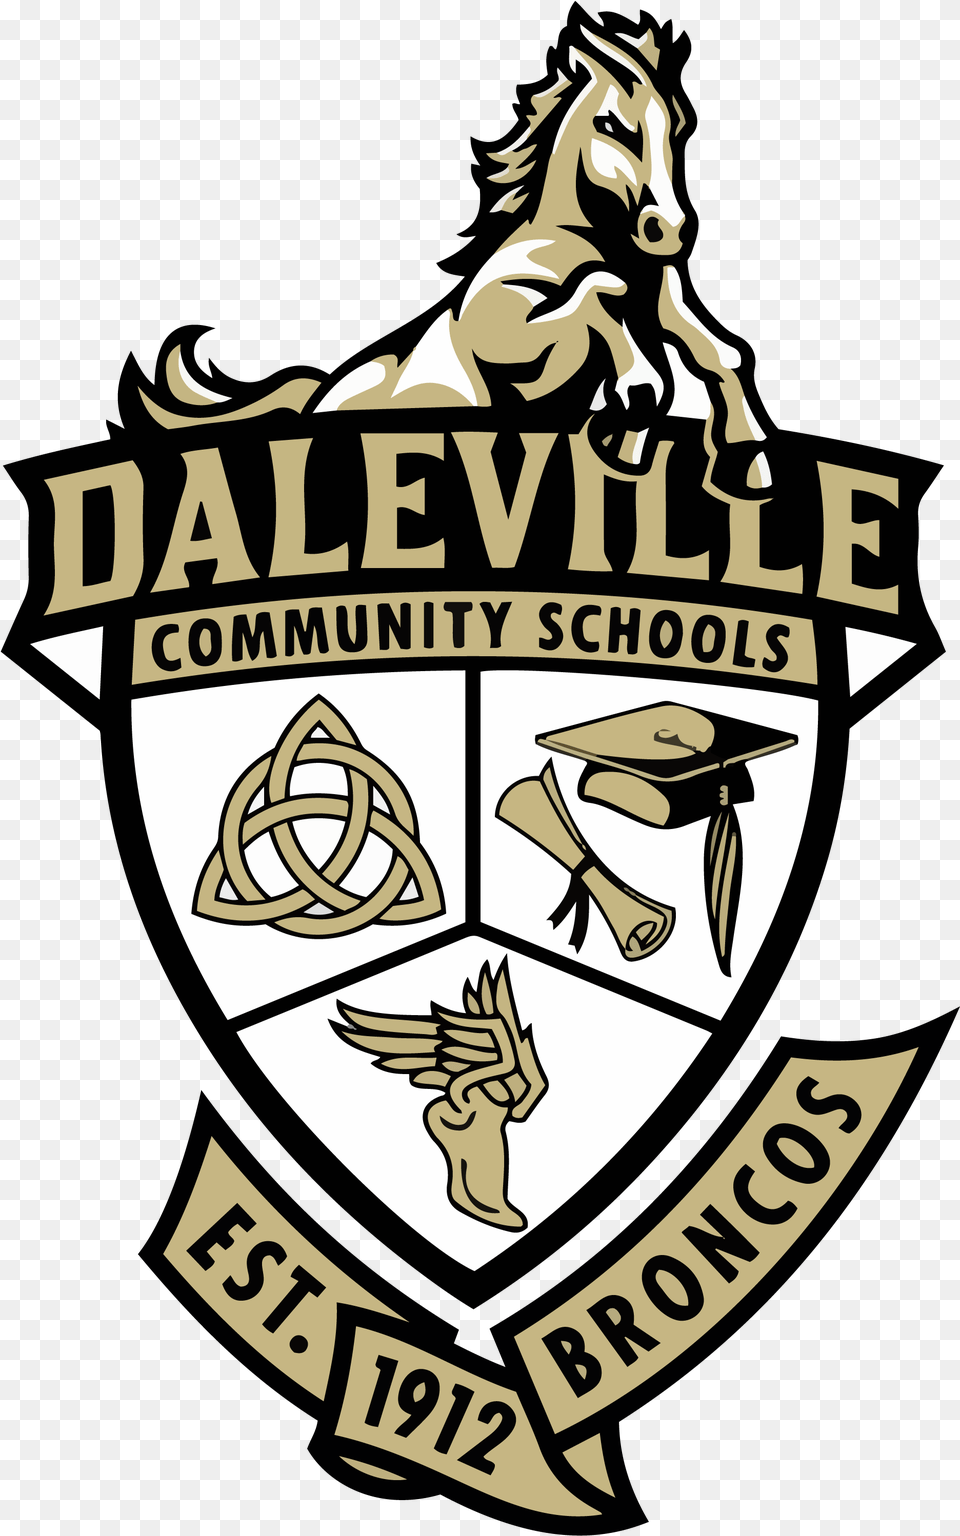 Daleville Community Schools Automotive Decal, Badge, Symbol, Logo, Emblem Png Image